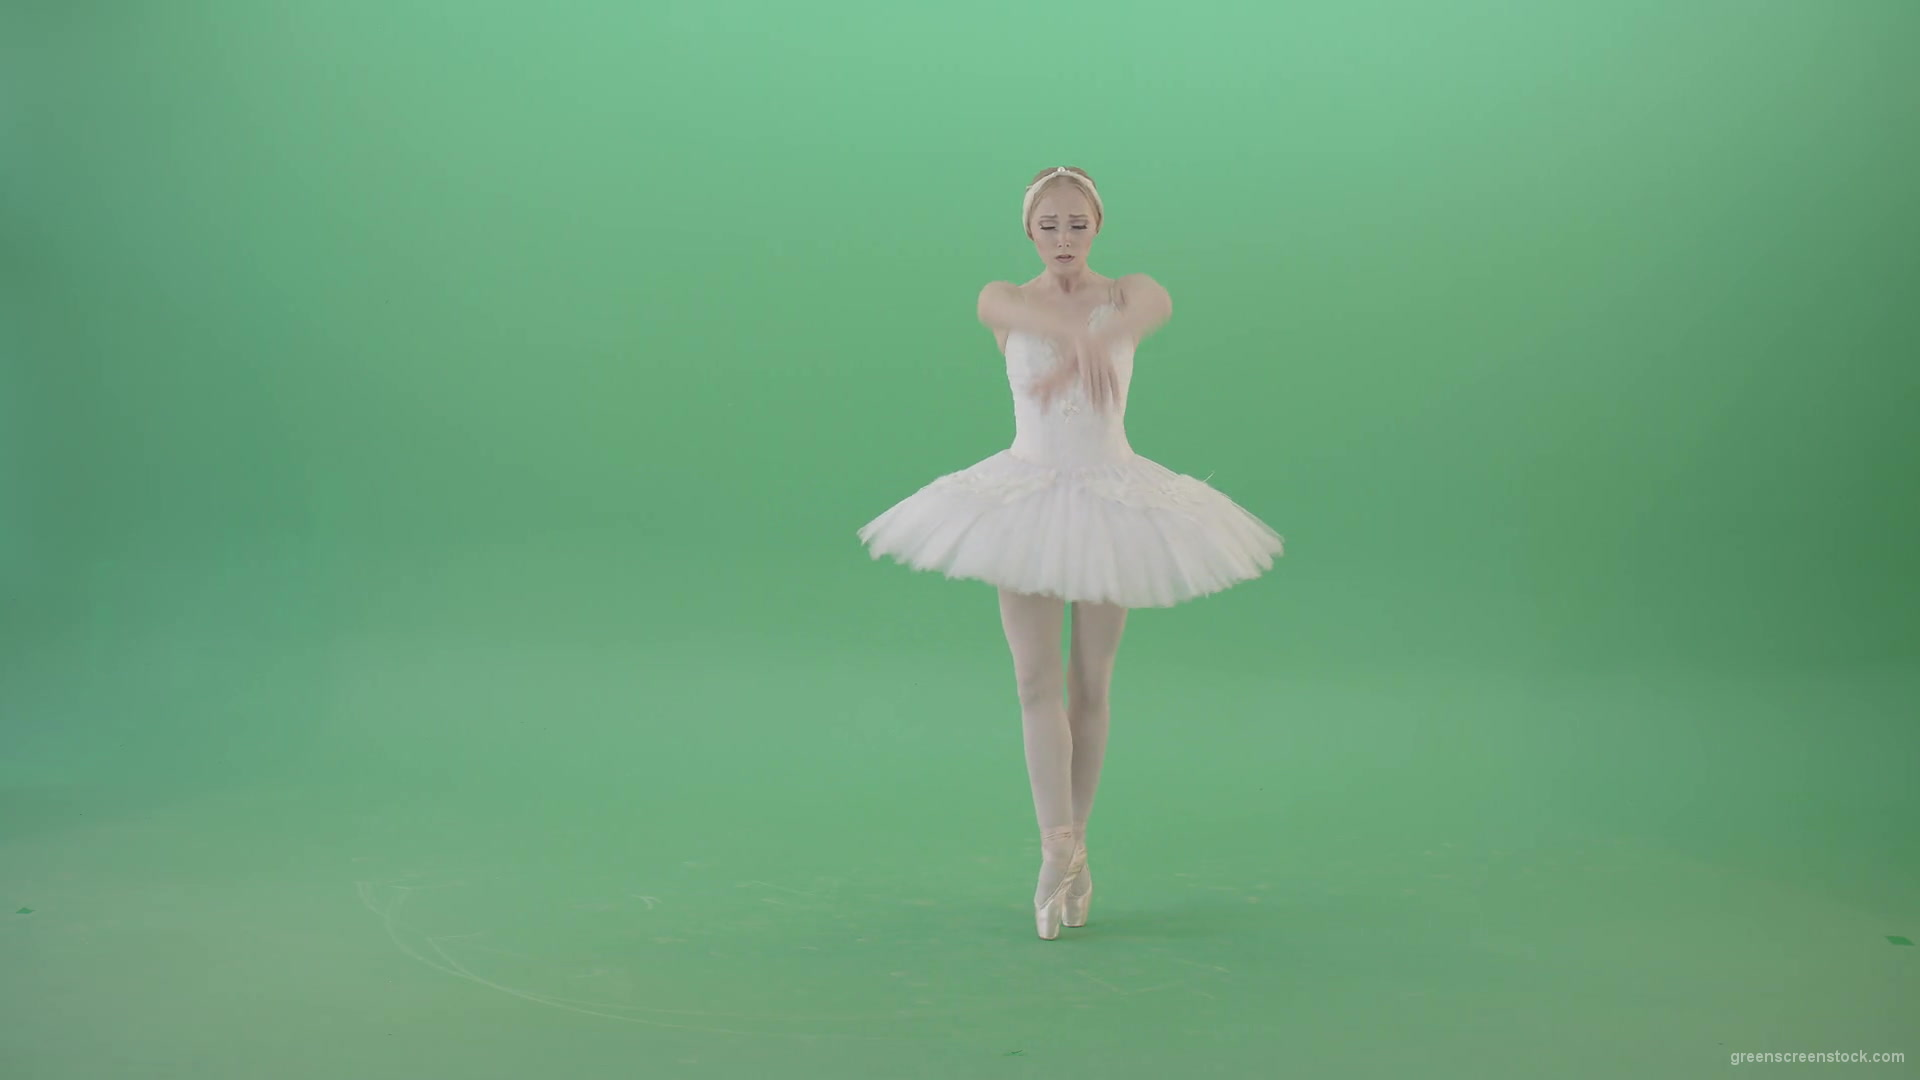 Luxury-Vienna-Opera-Ballet-Girl-has-a-PSY-Flight-on-Green-Screen-4K-Video-Footage-1920_007 Green Screen Stock